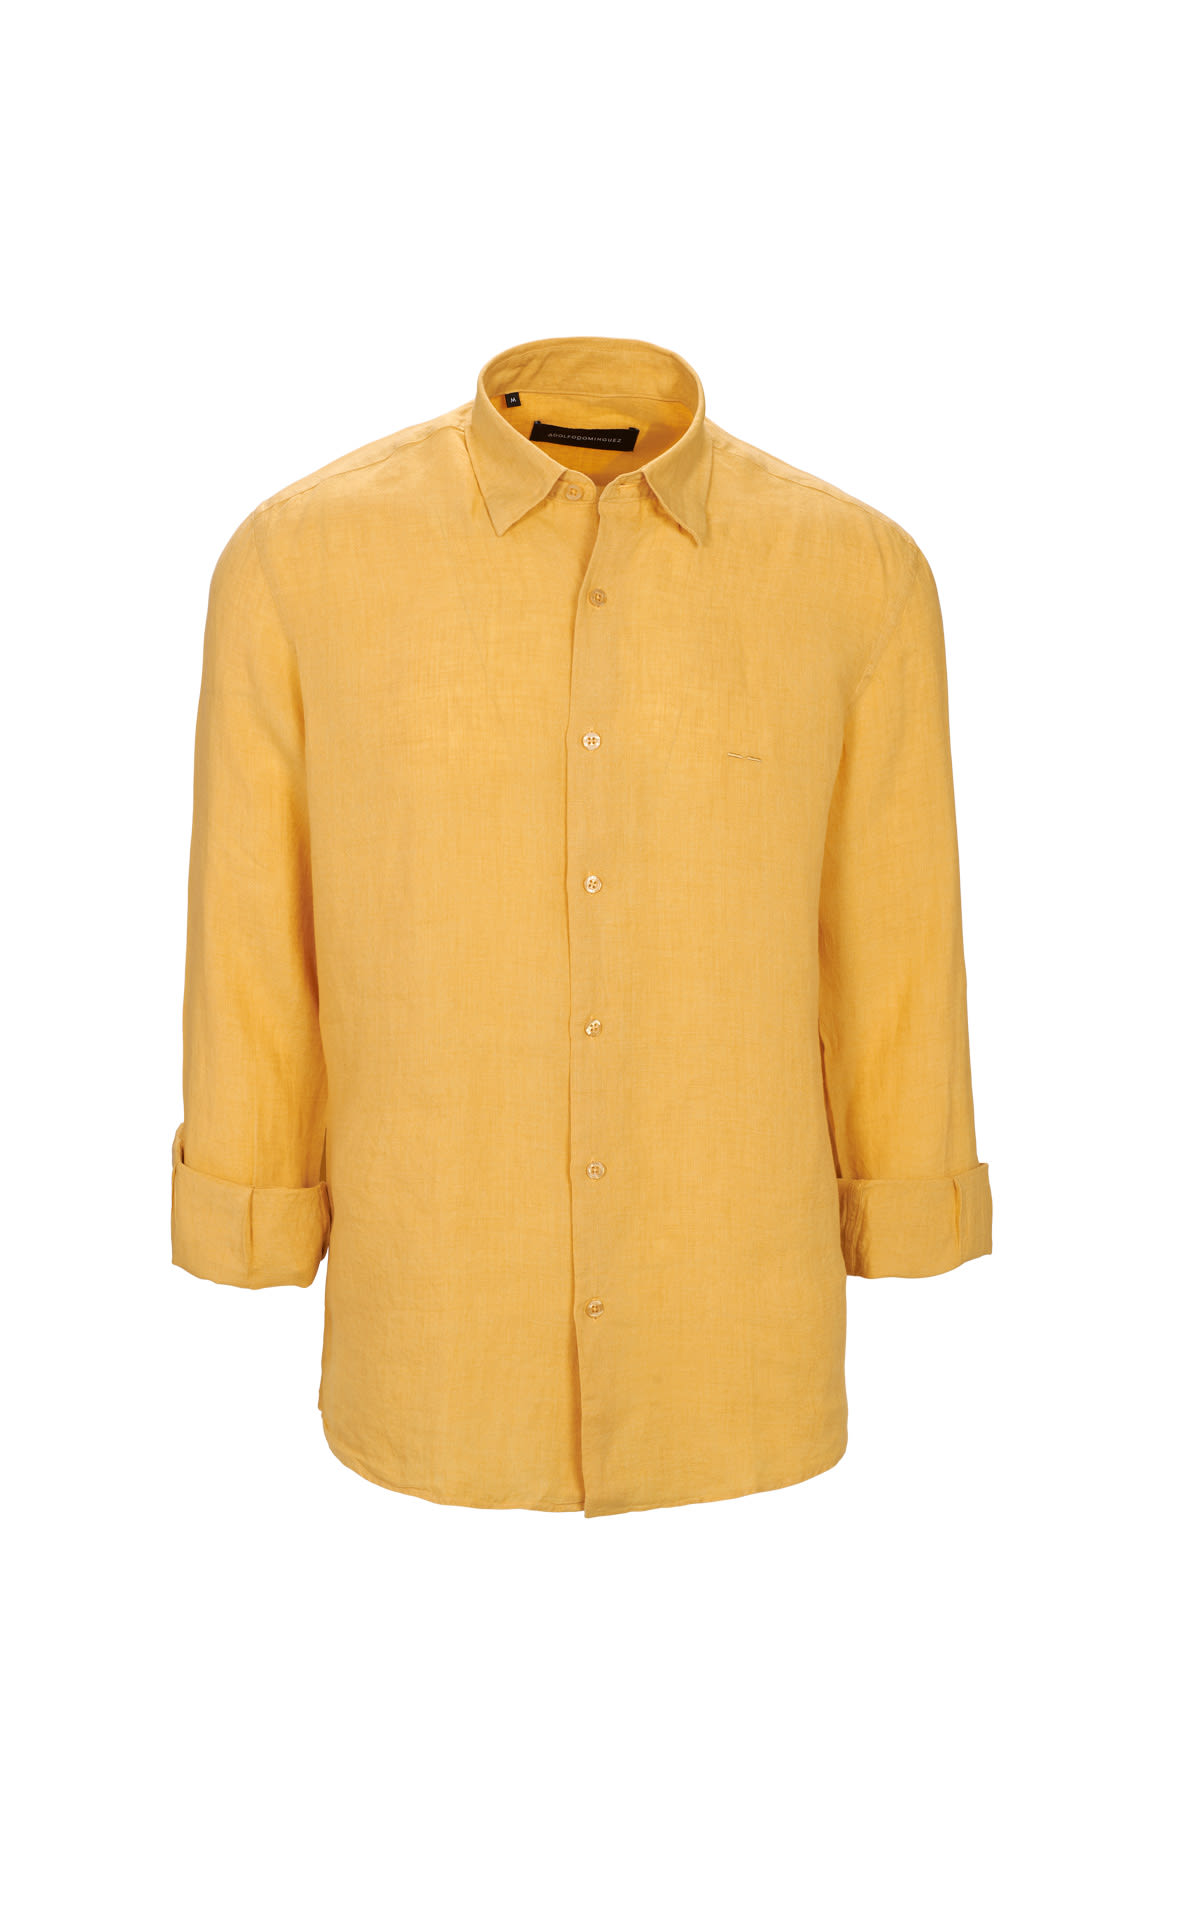 yellow thread shirt Adolfo DOminguez